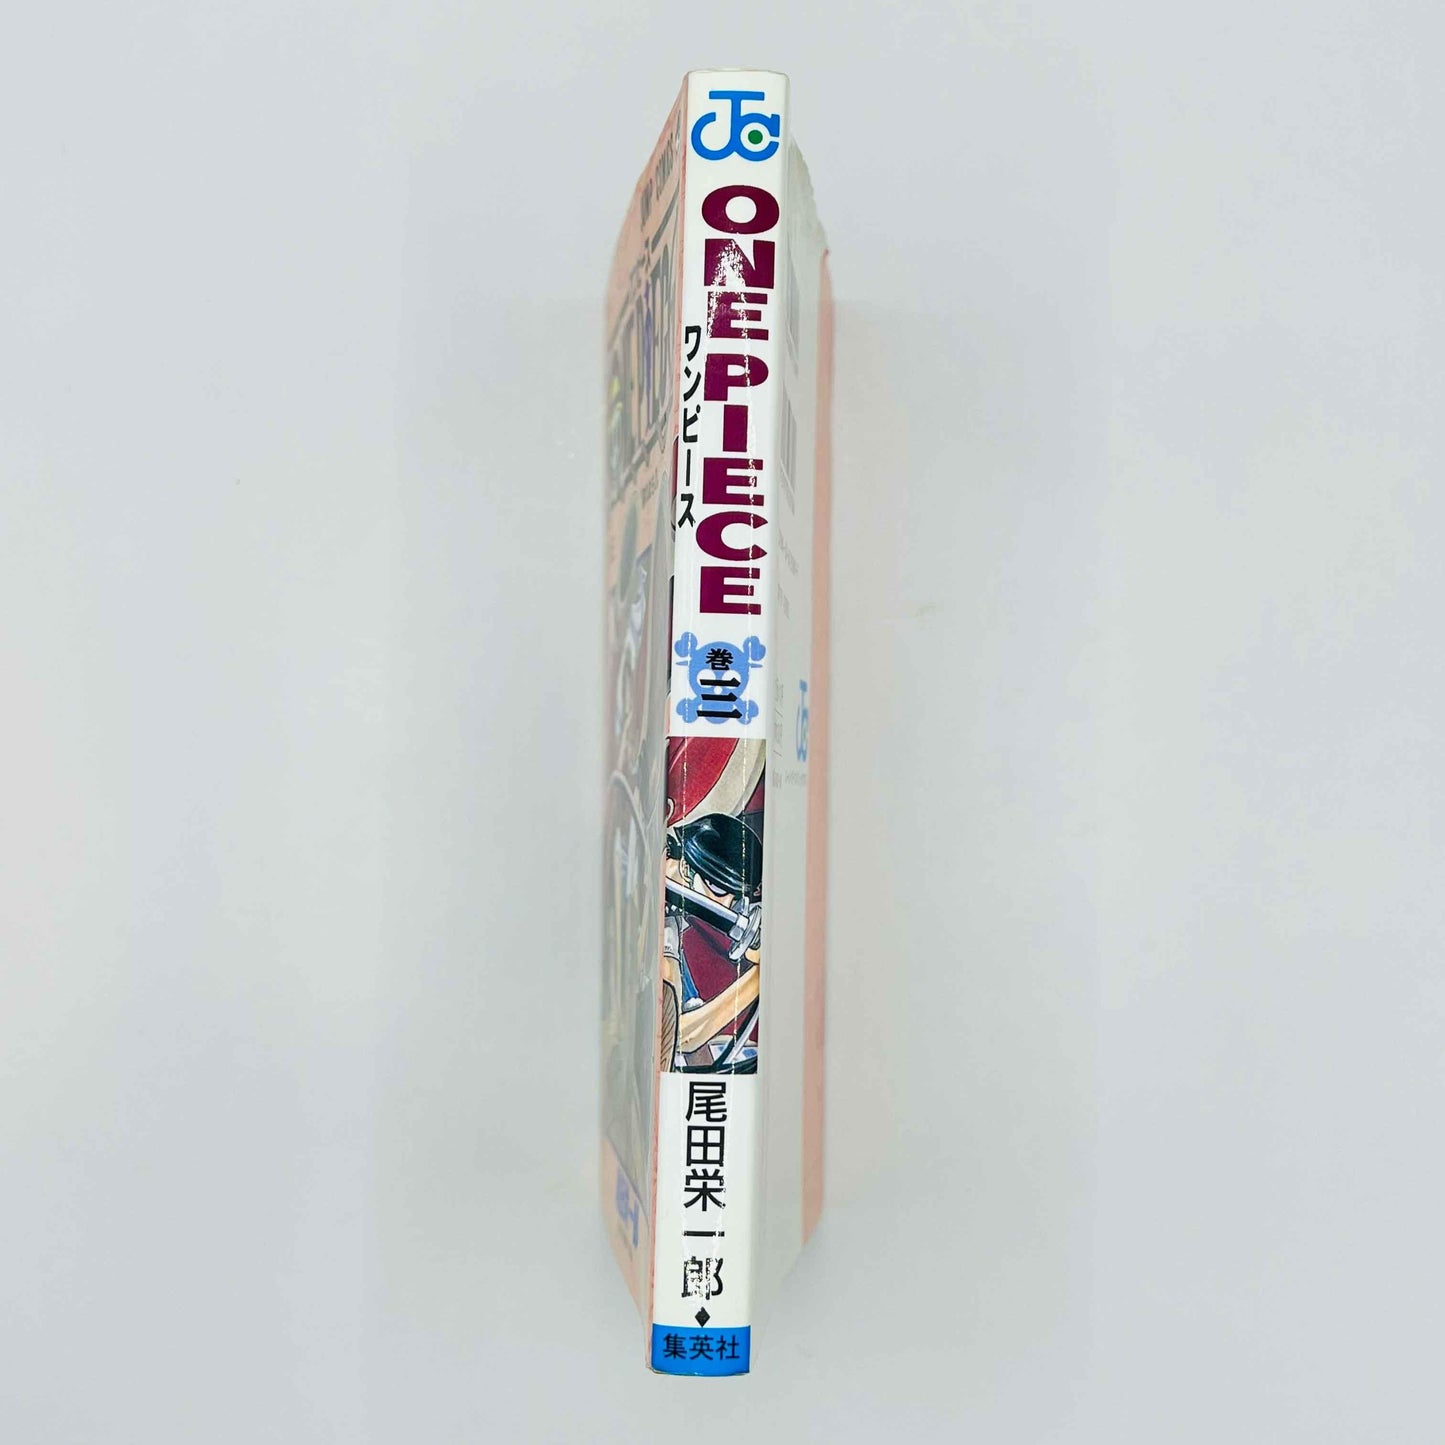 One Piece - Volume 03 - 1stPrint.net - 1st First Print Edition Manga Store - M-OP-03-003